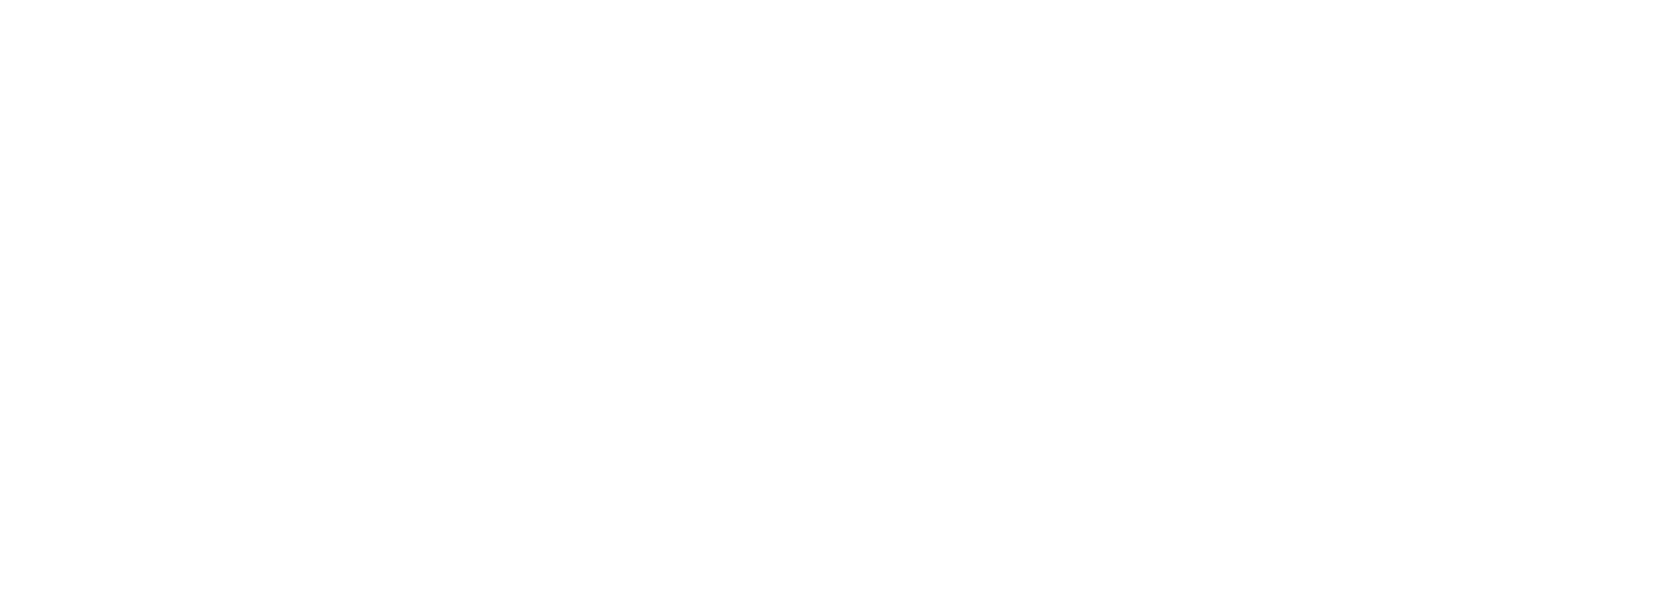 Crazy Games